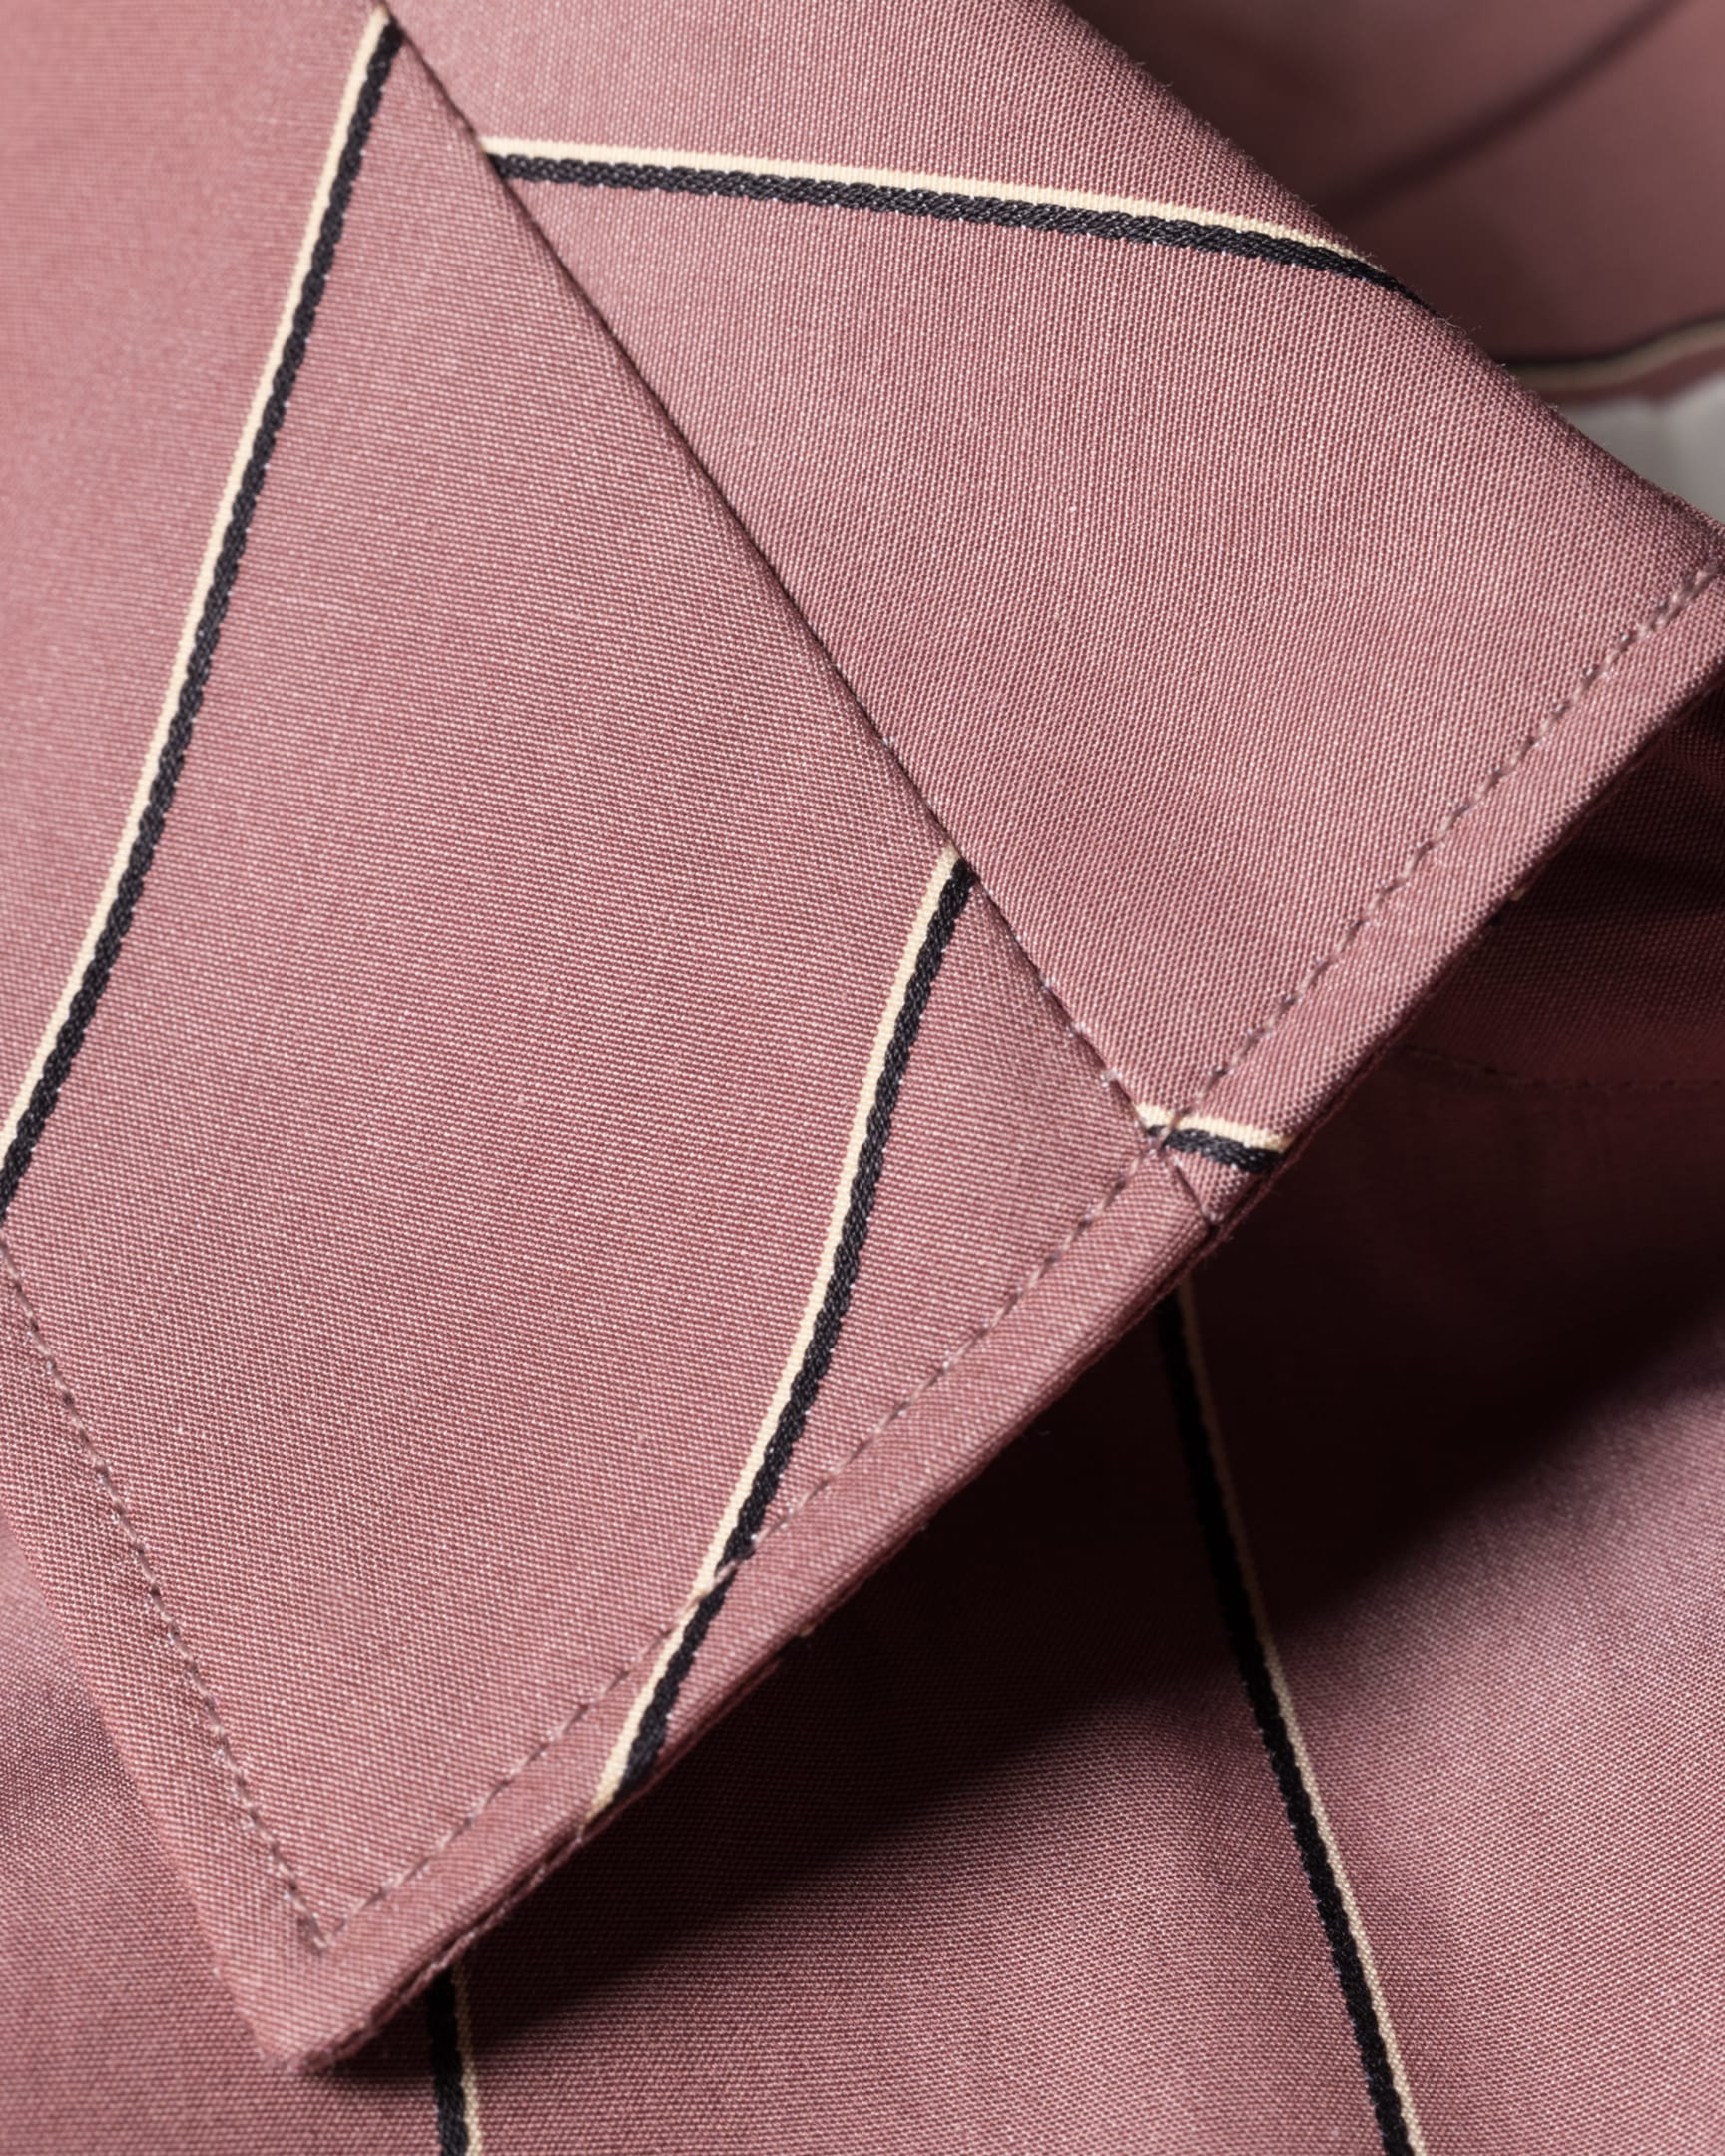 Detail View - Dusky Pink Oversized Stripe Cotton Shirt Paul Smith